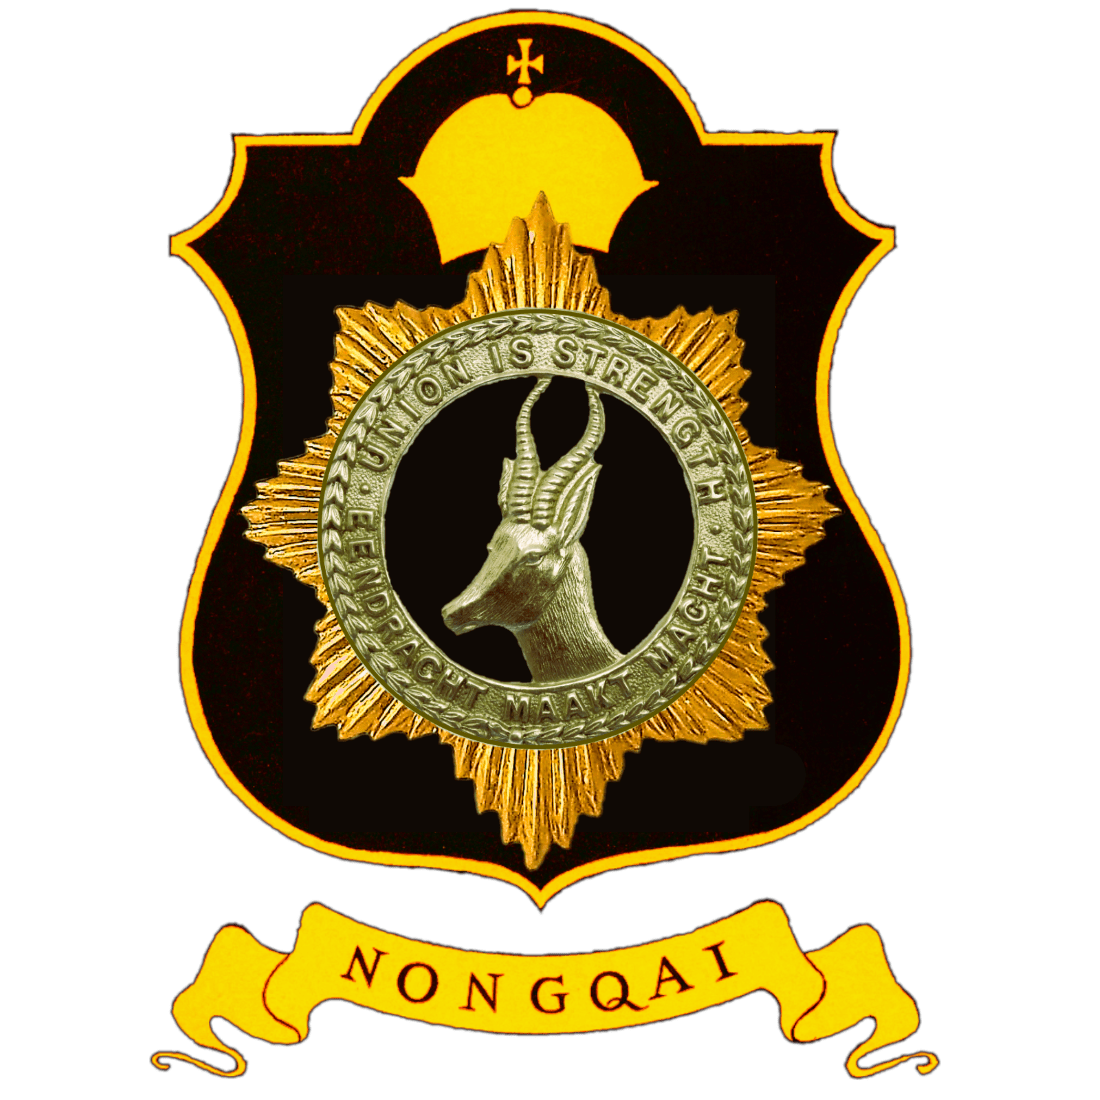 Nongqai coat of arms